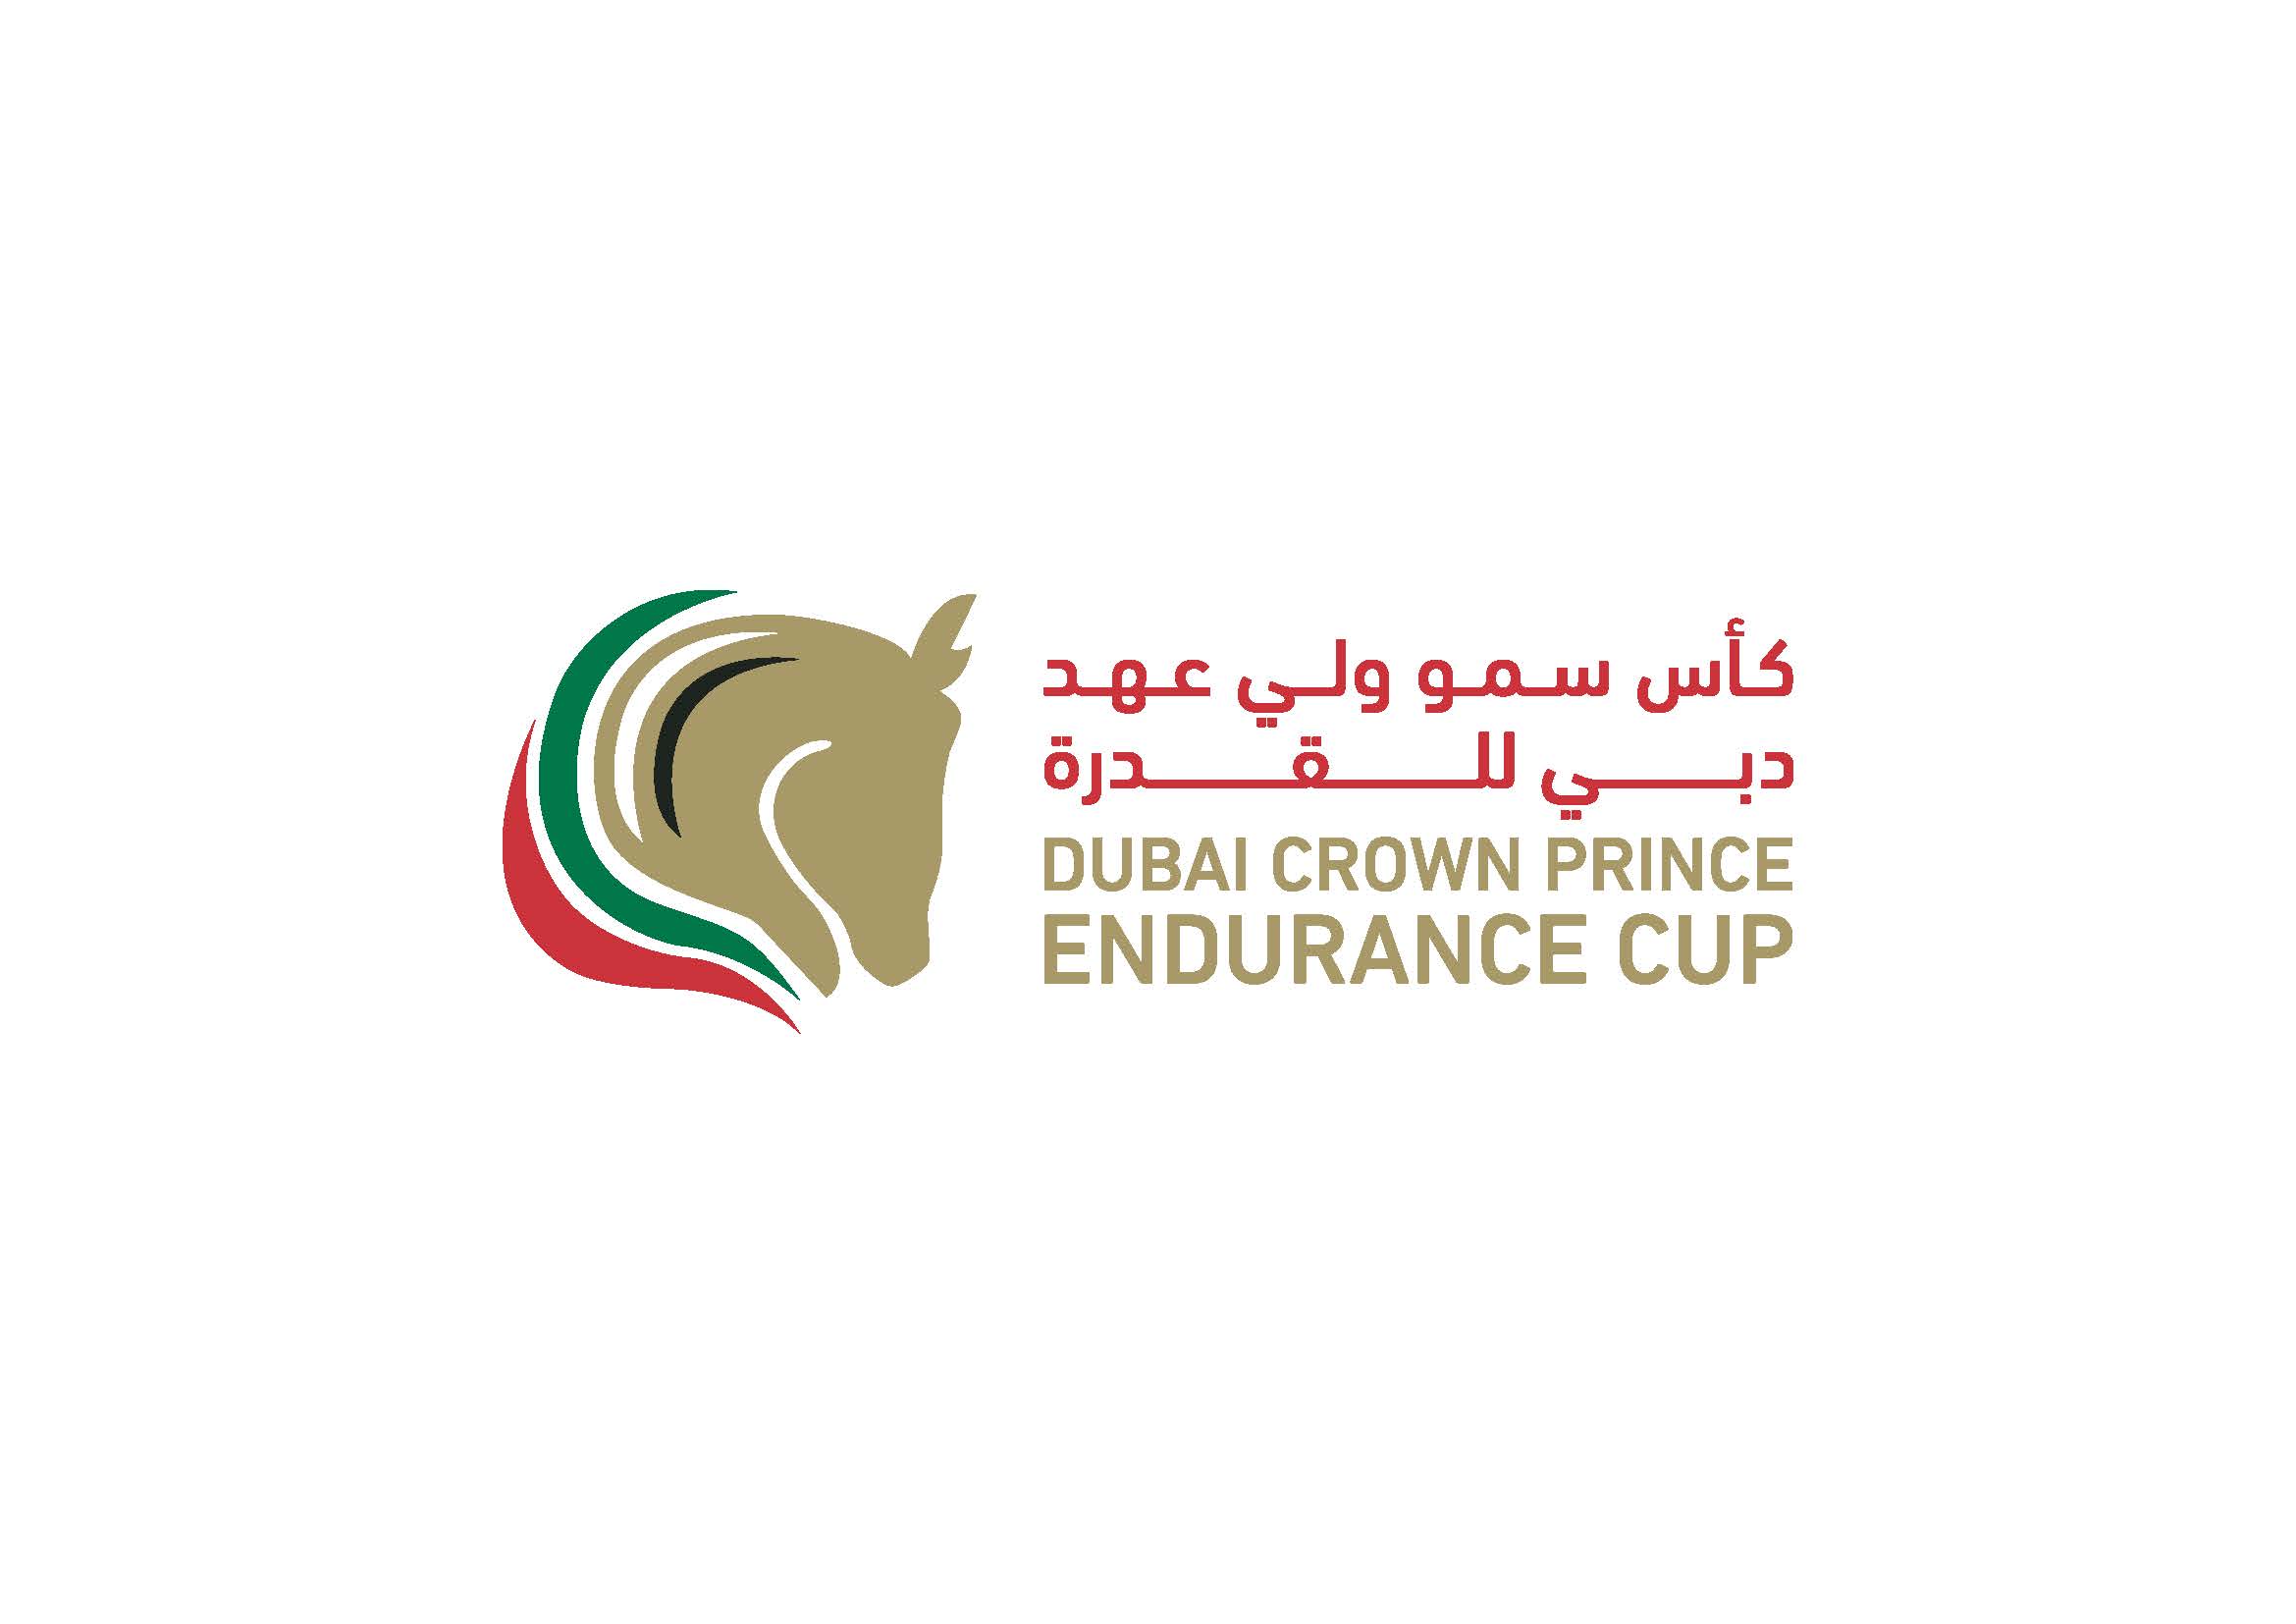 Endurance Cup